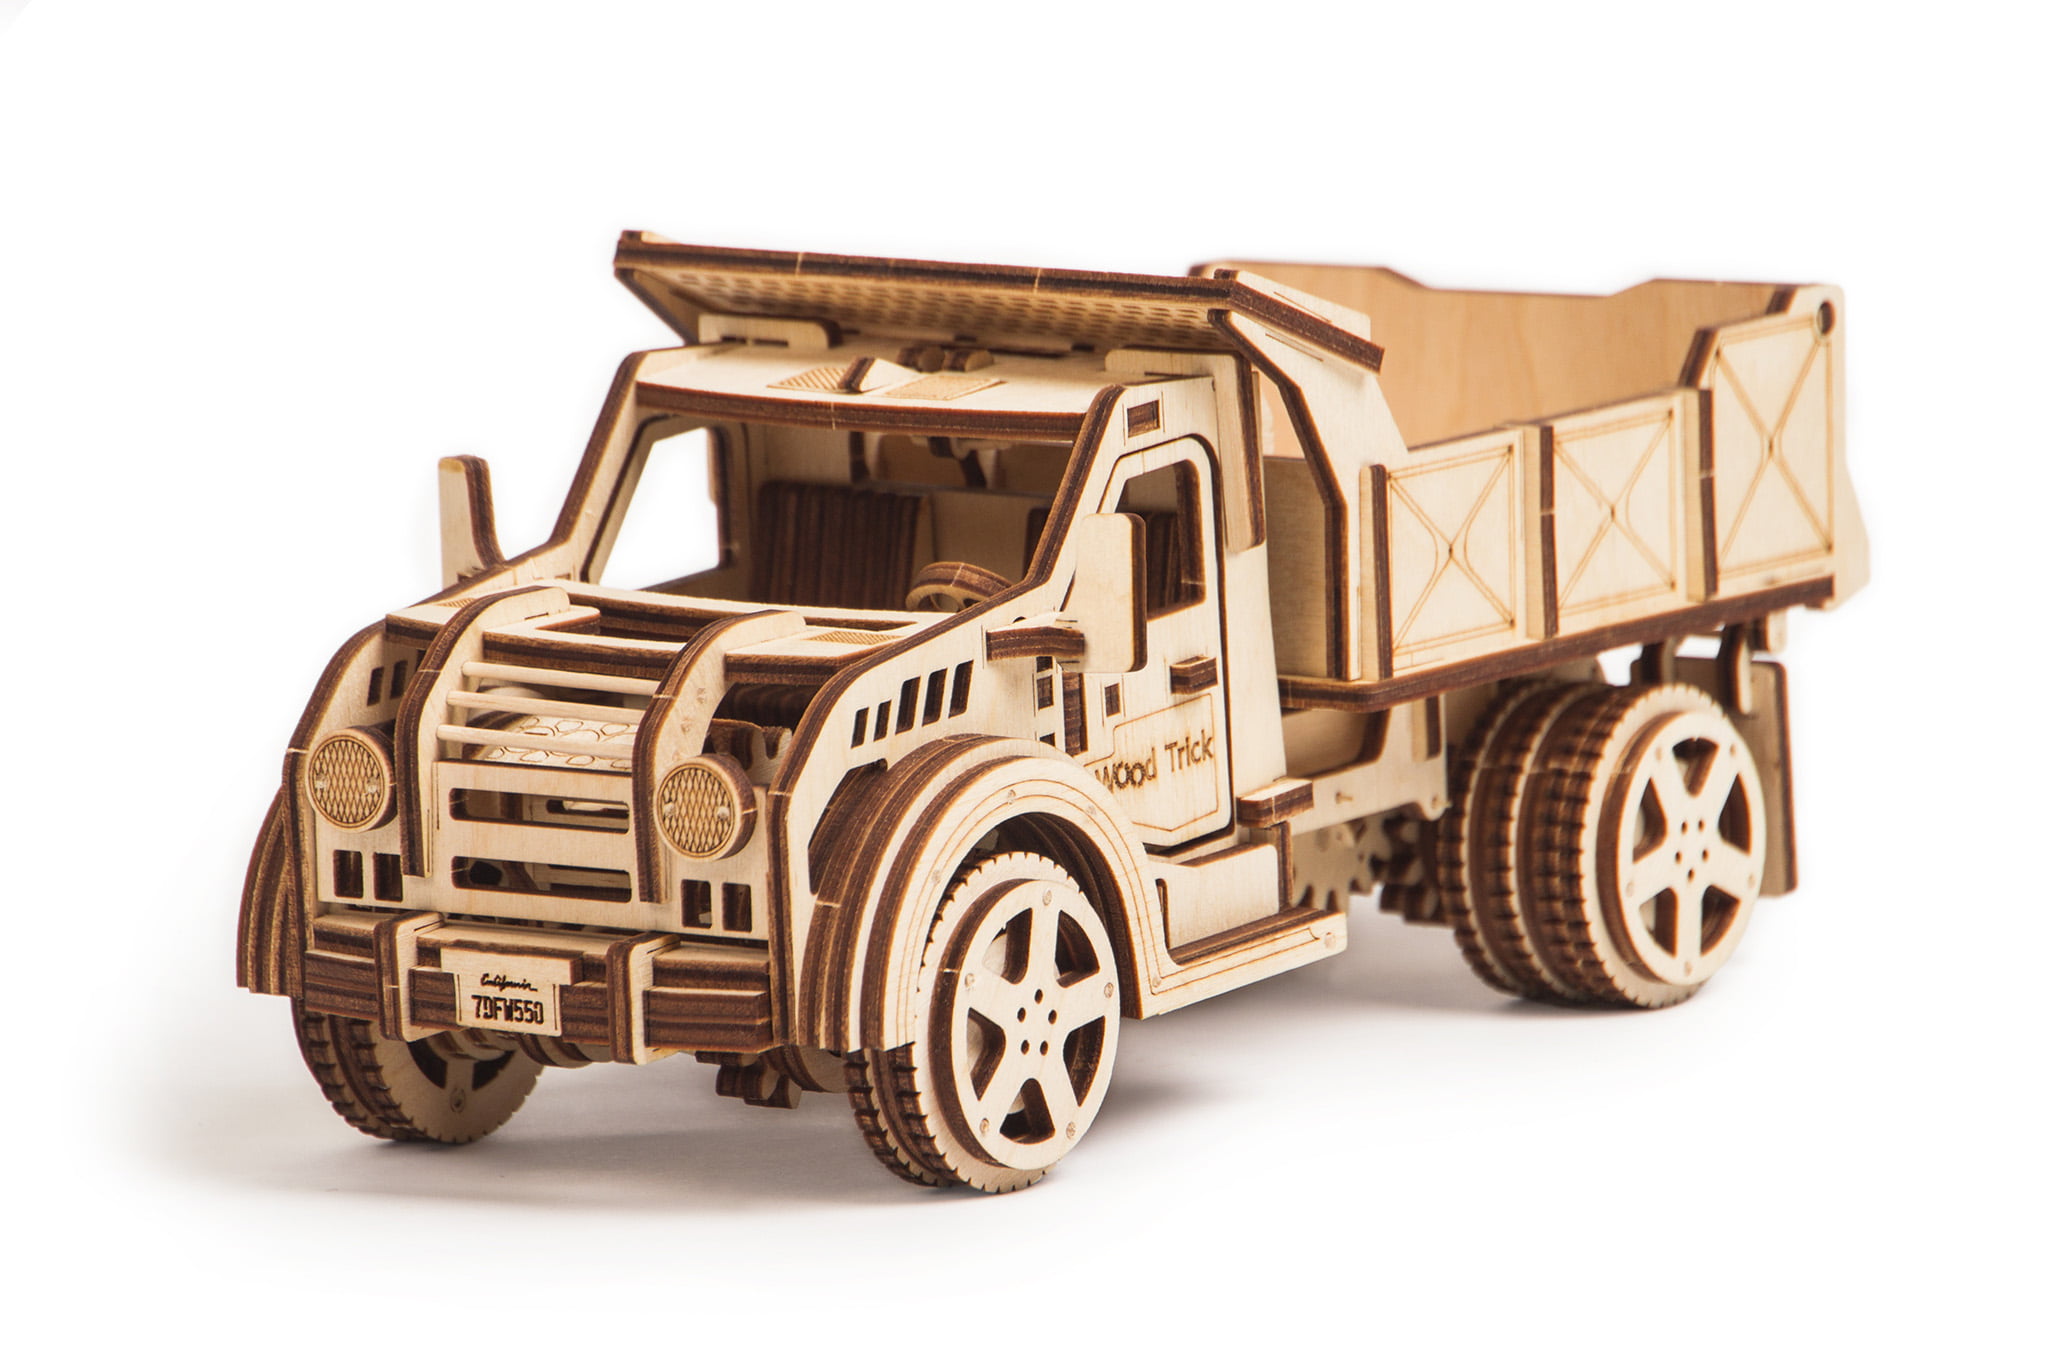 Oil Pump Jack Mechanical Model to Build 3D Wo Wood Trick Oil Derrick Rig Toy 